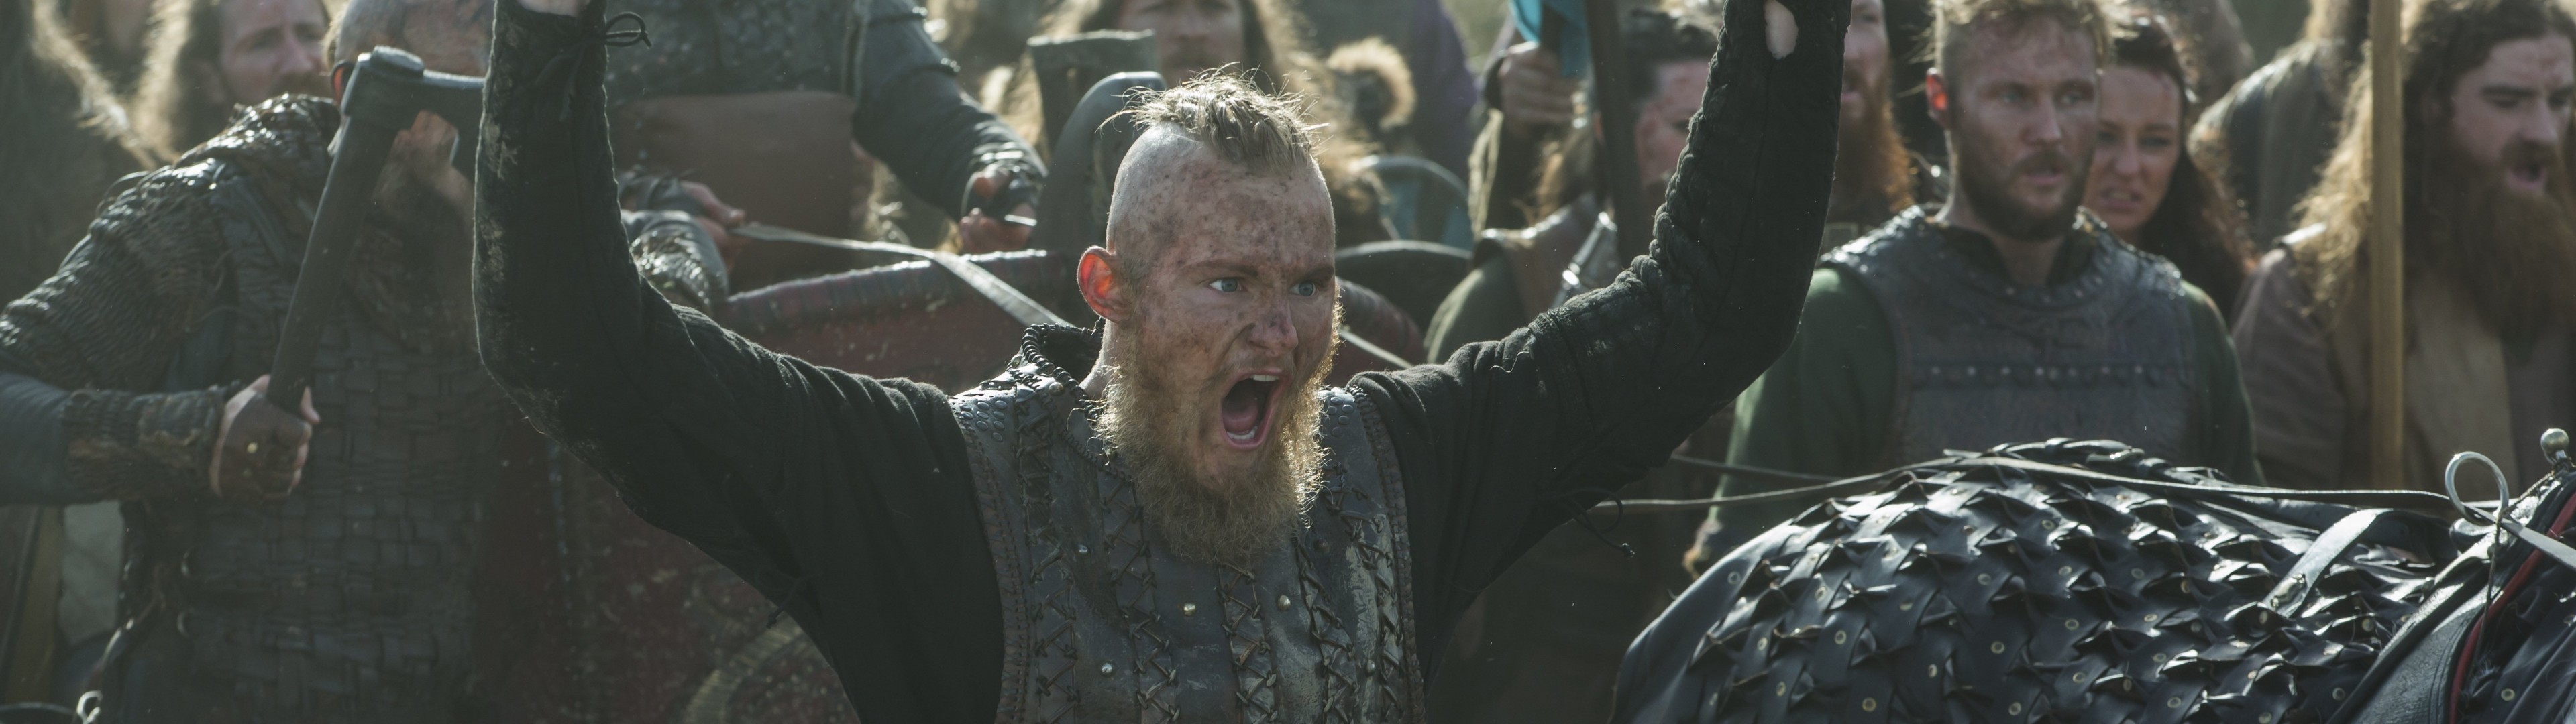 Ragnar, Vikings, Armor, Weapons, Tv Series - HD Wallpaper 